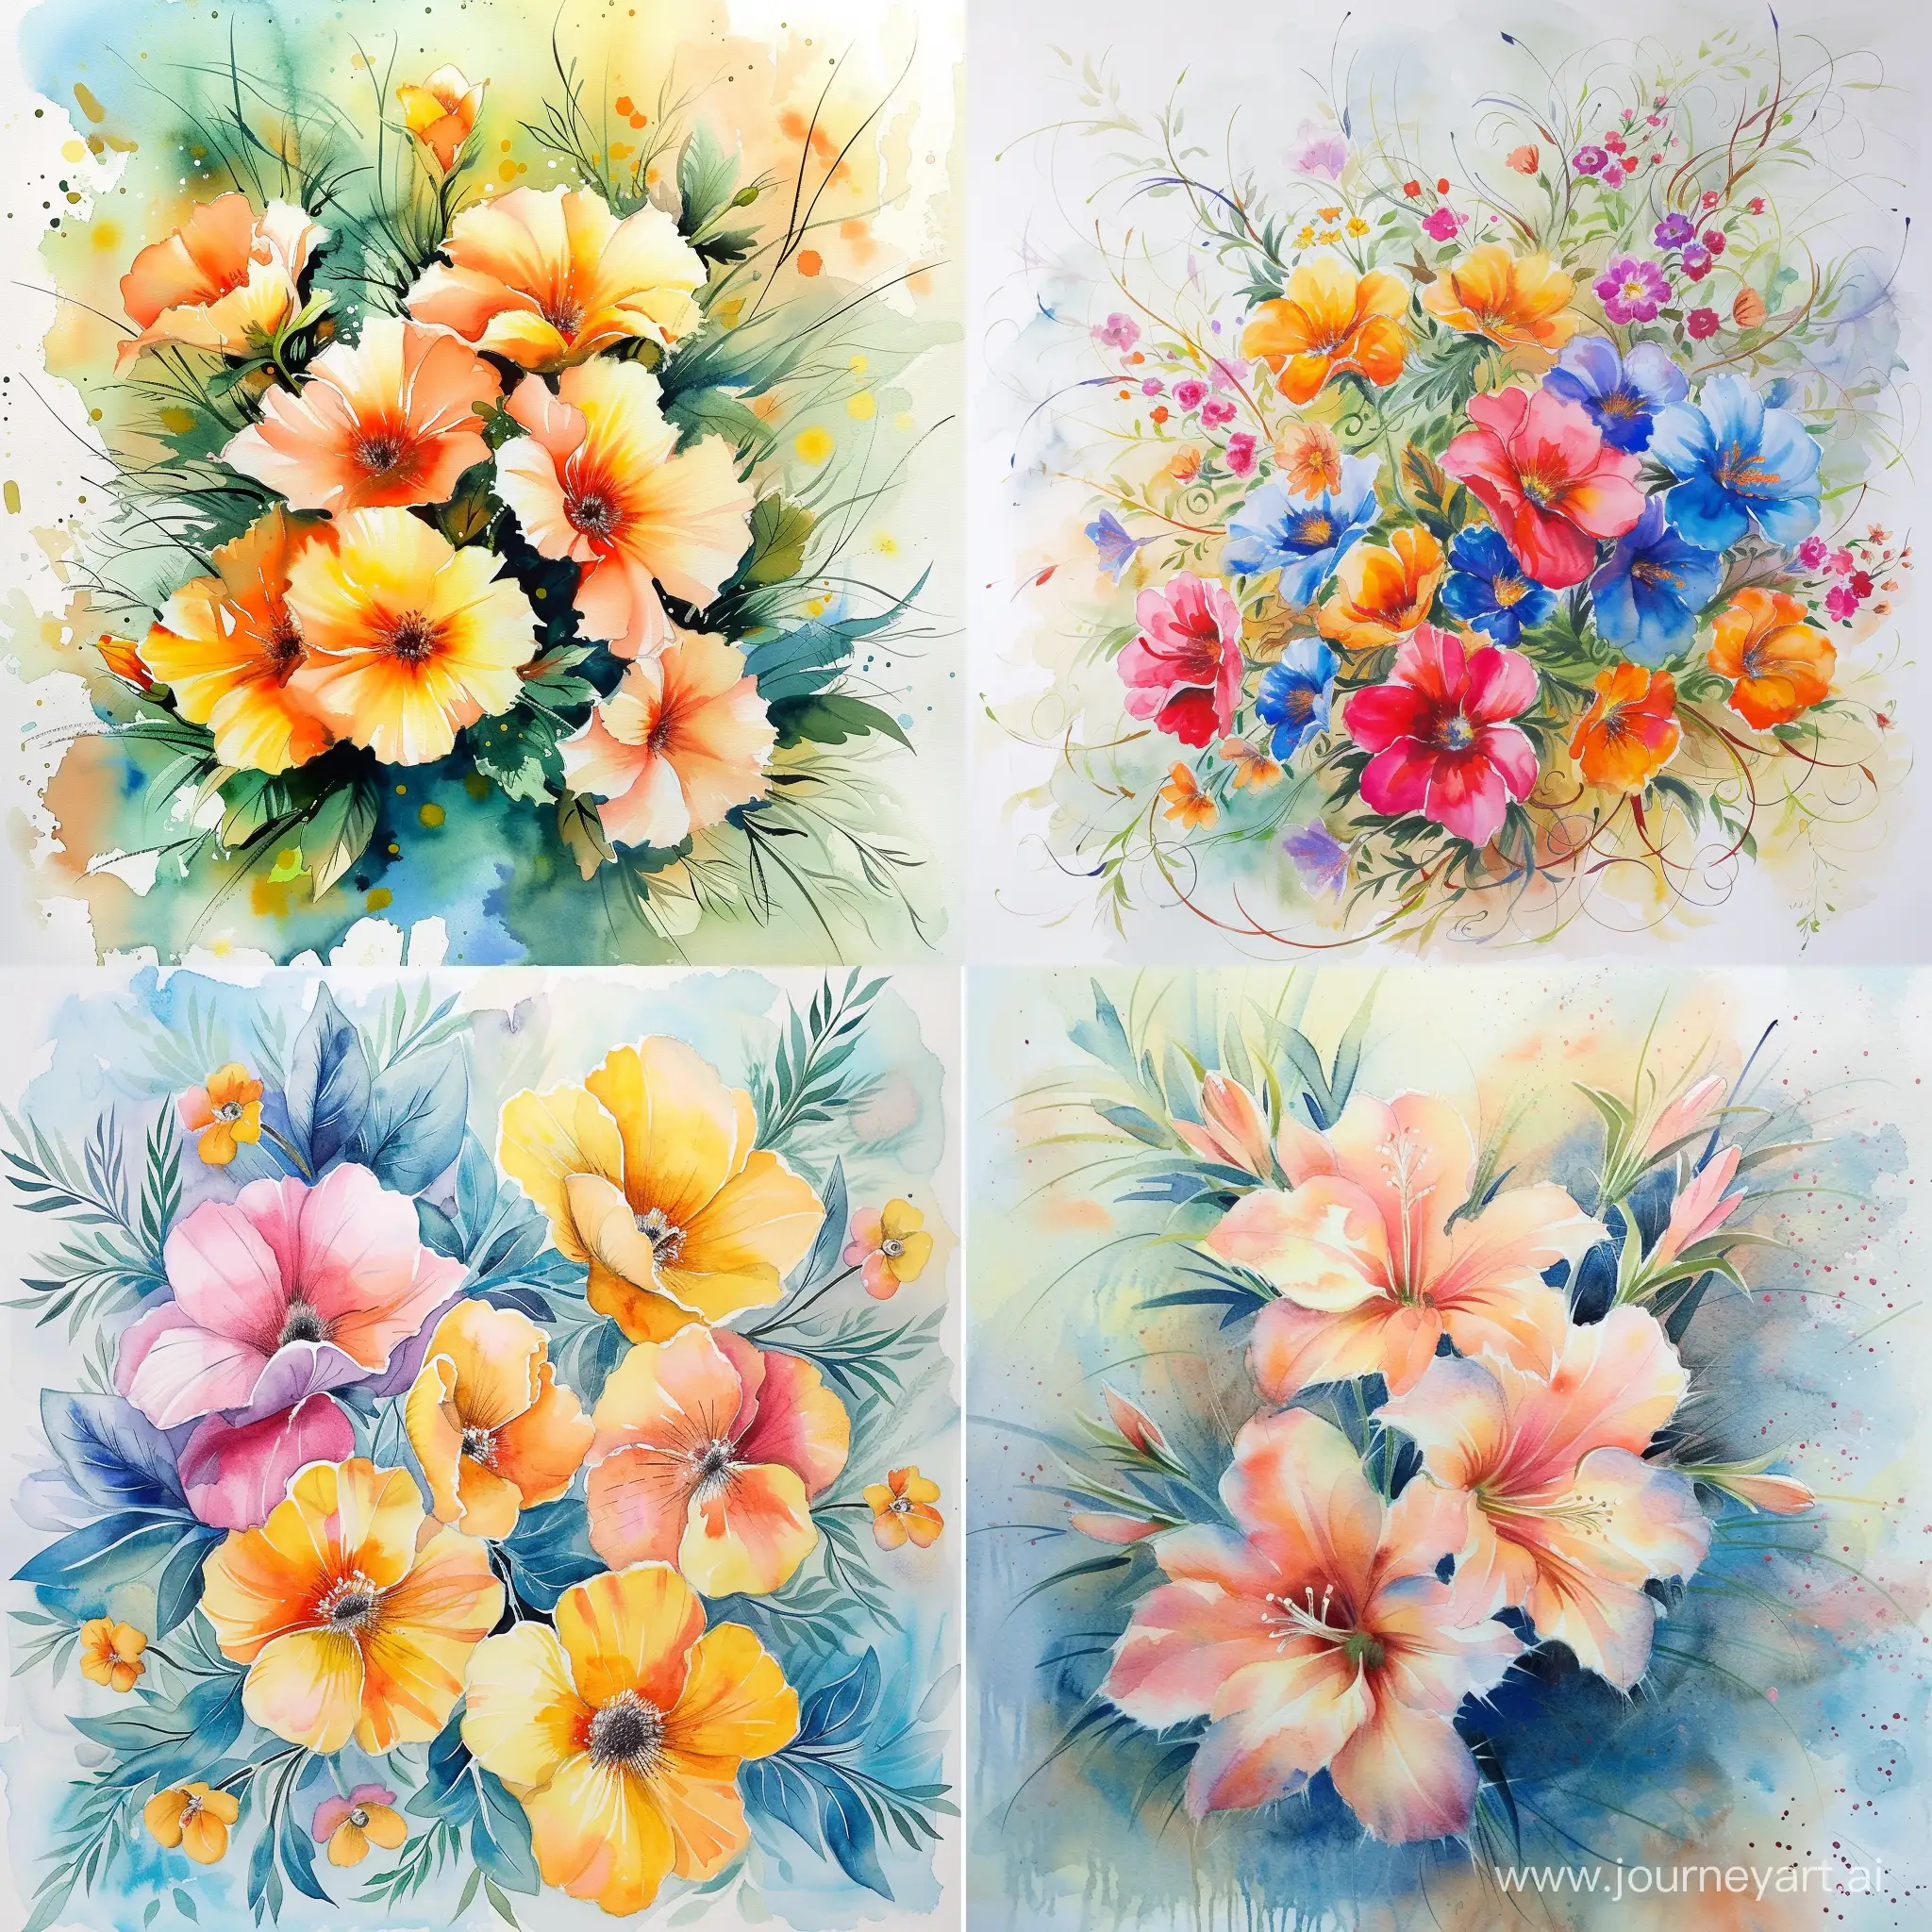 Vibrant-Watercolor-Floral-Painting-Botanical-Art-Masterpiece